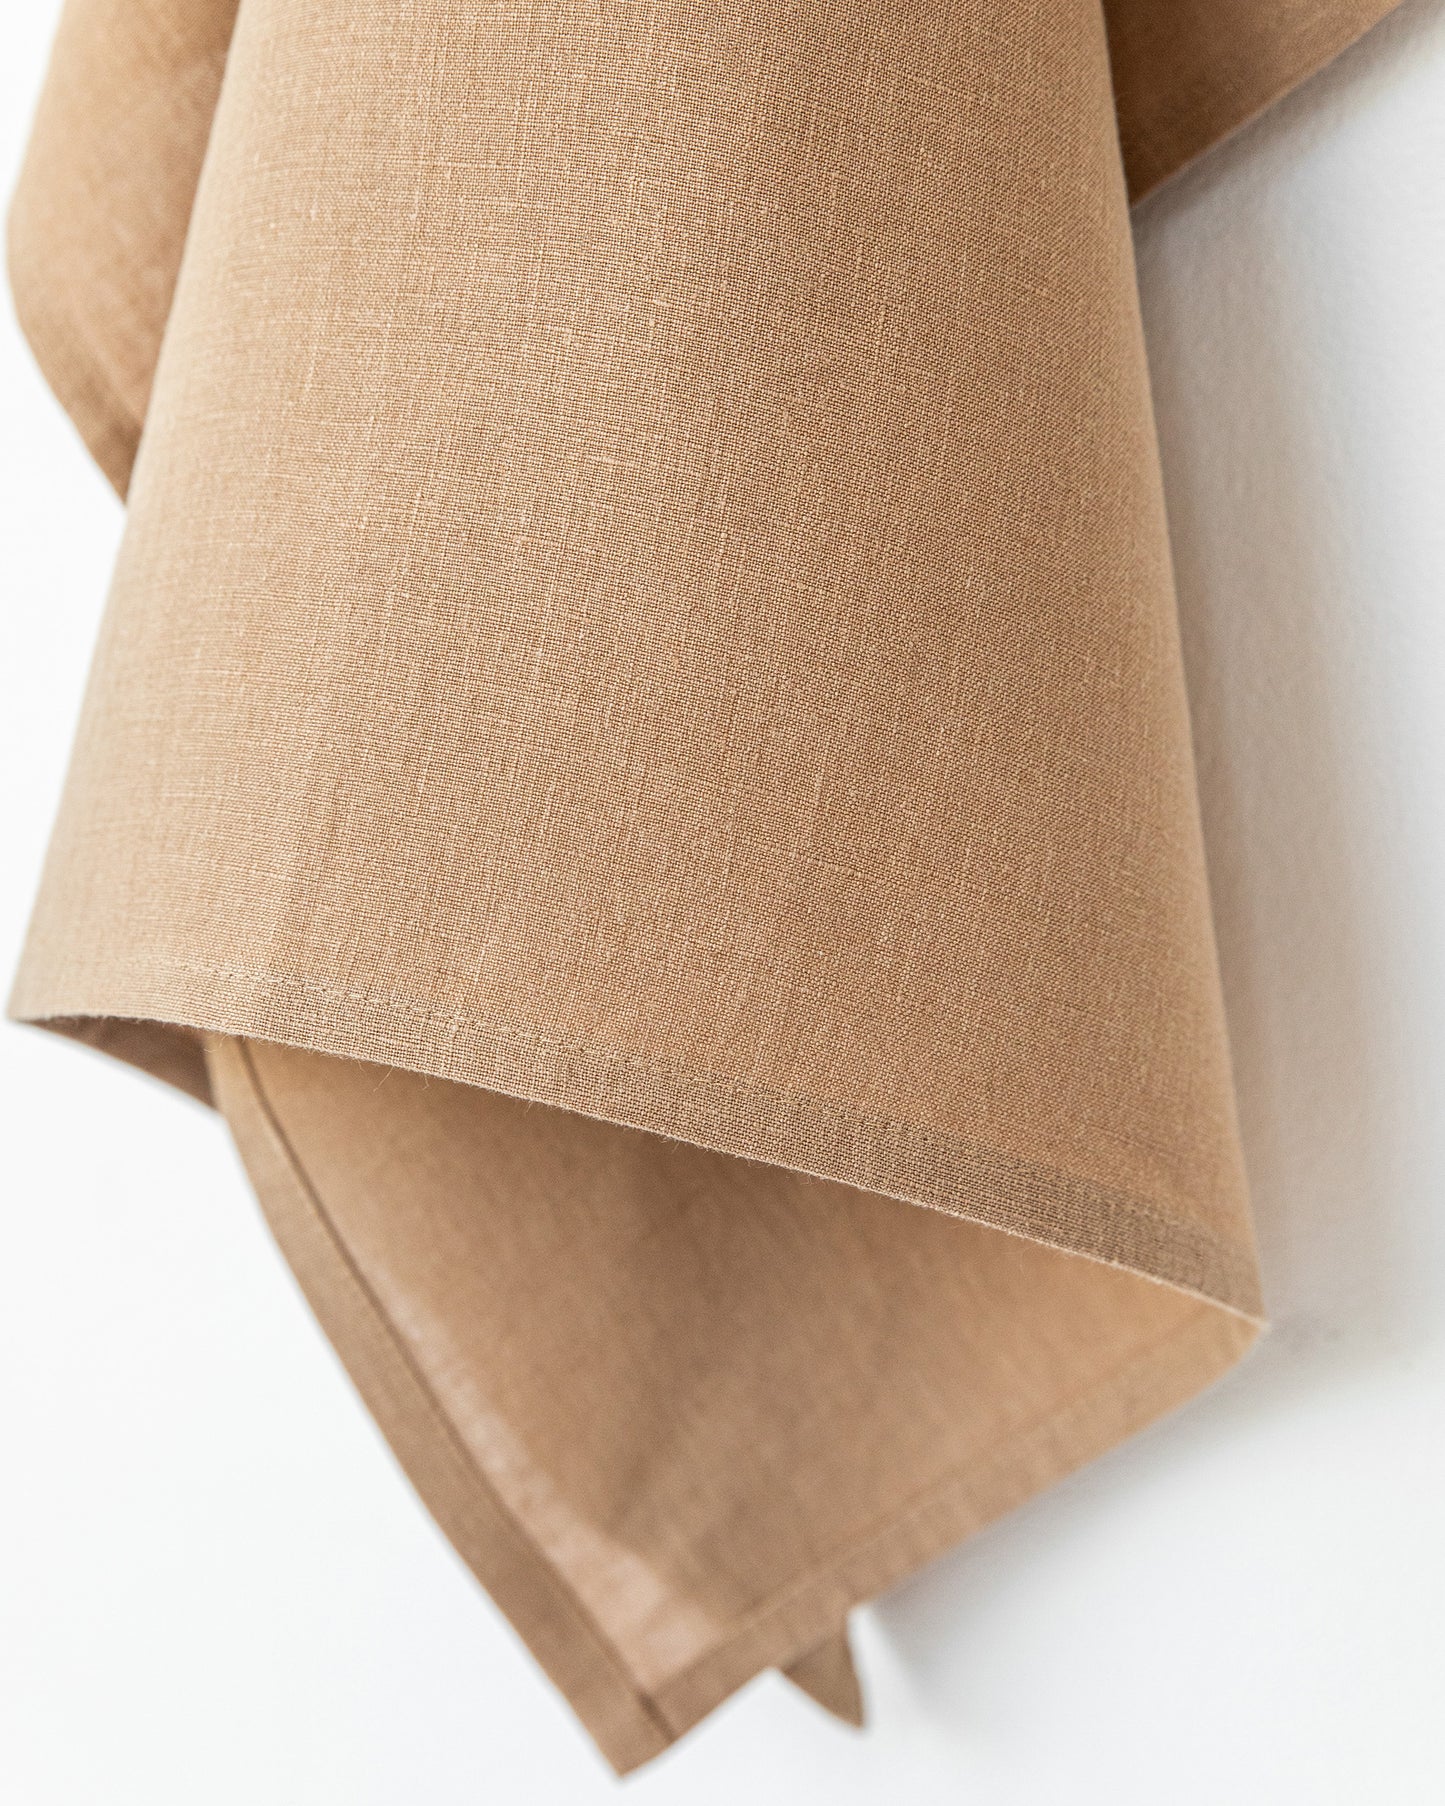 Linen tea towel in Latte - MagicLinen